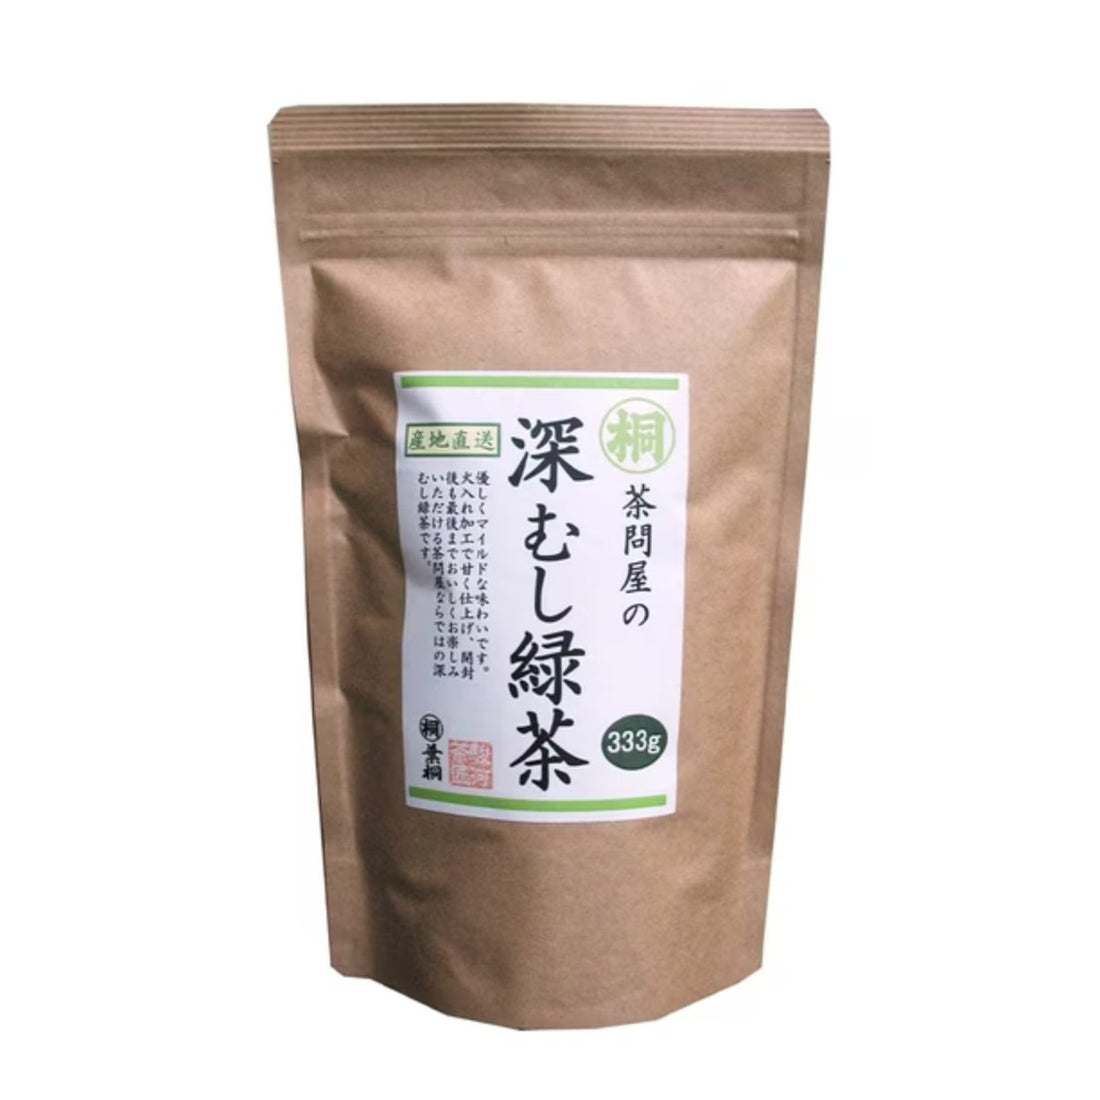 Hagiri tea wholesaler&